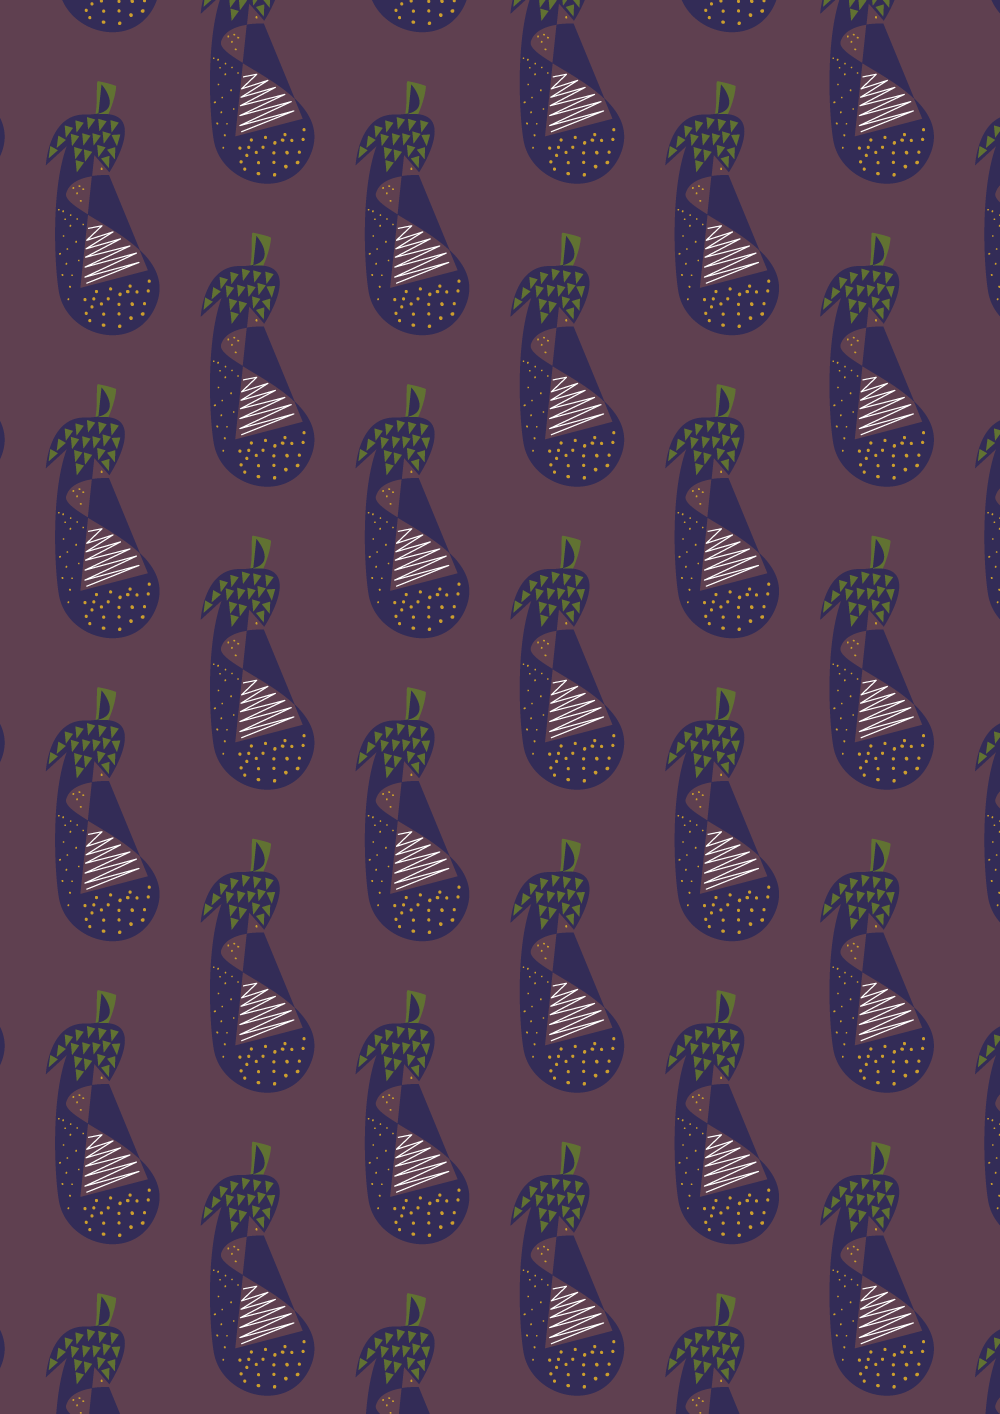 Eggplant pattern